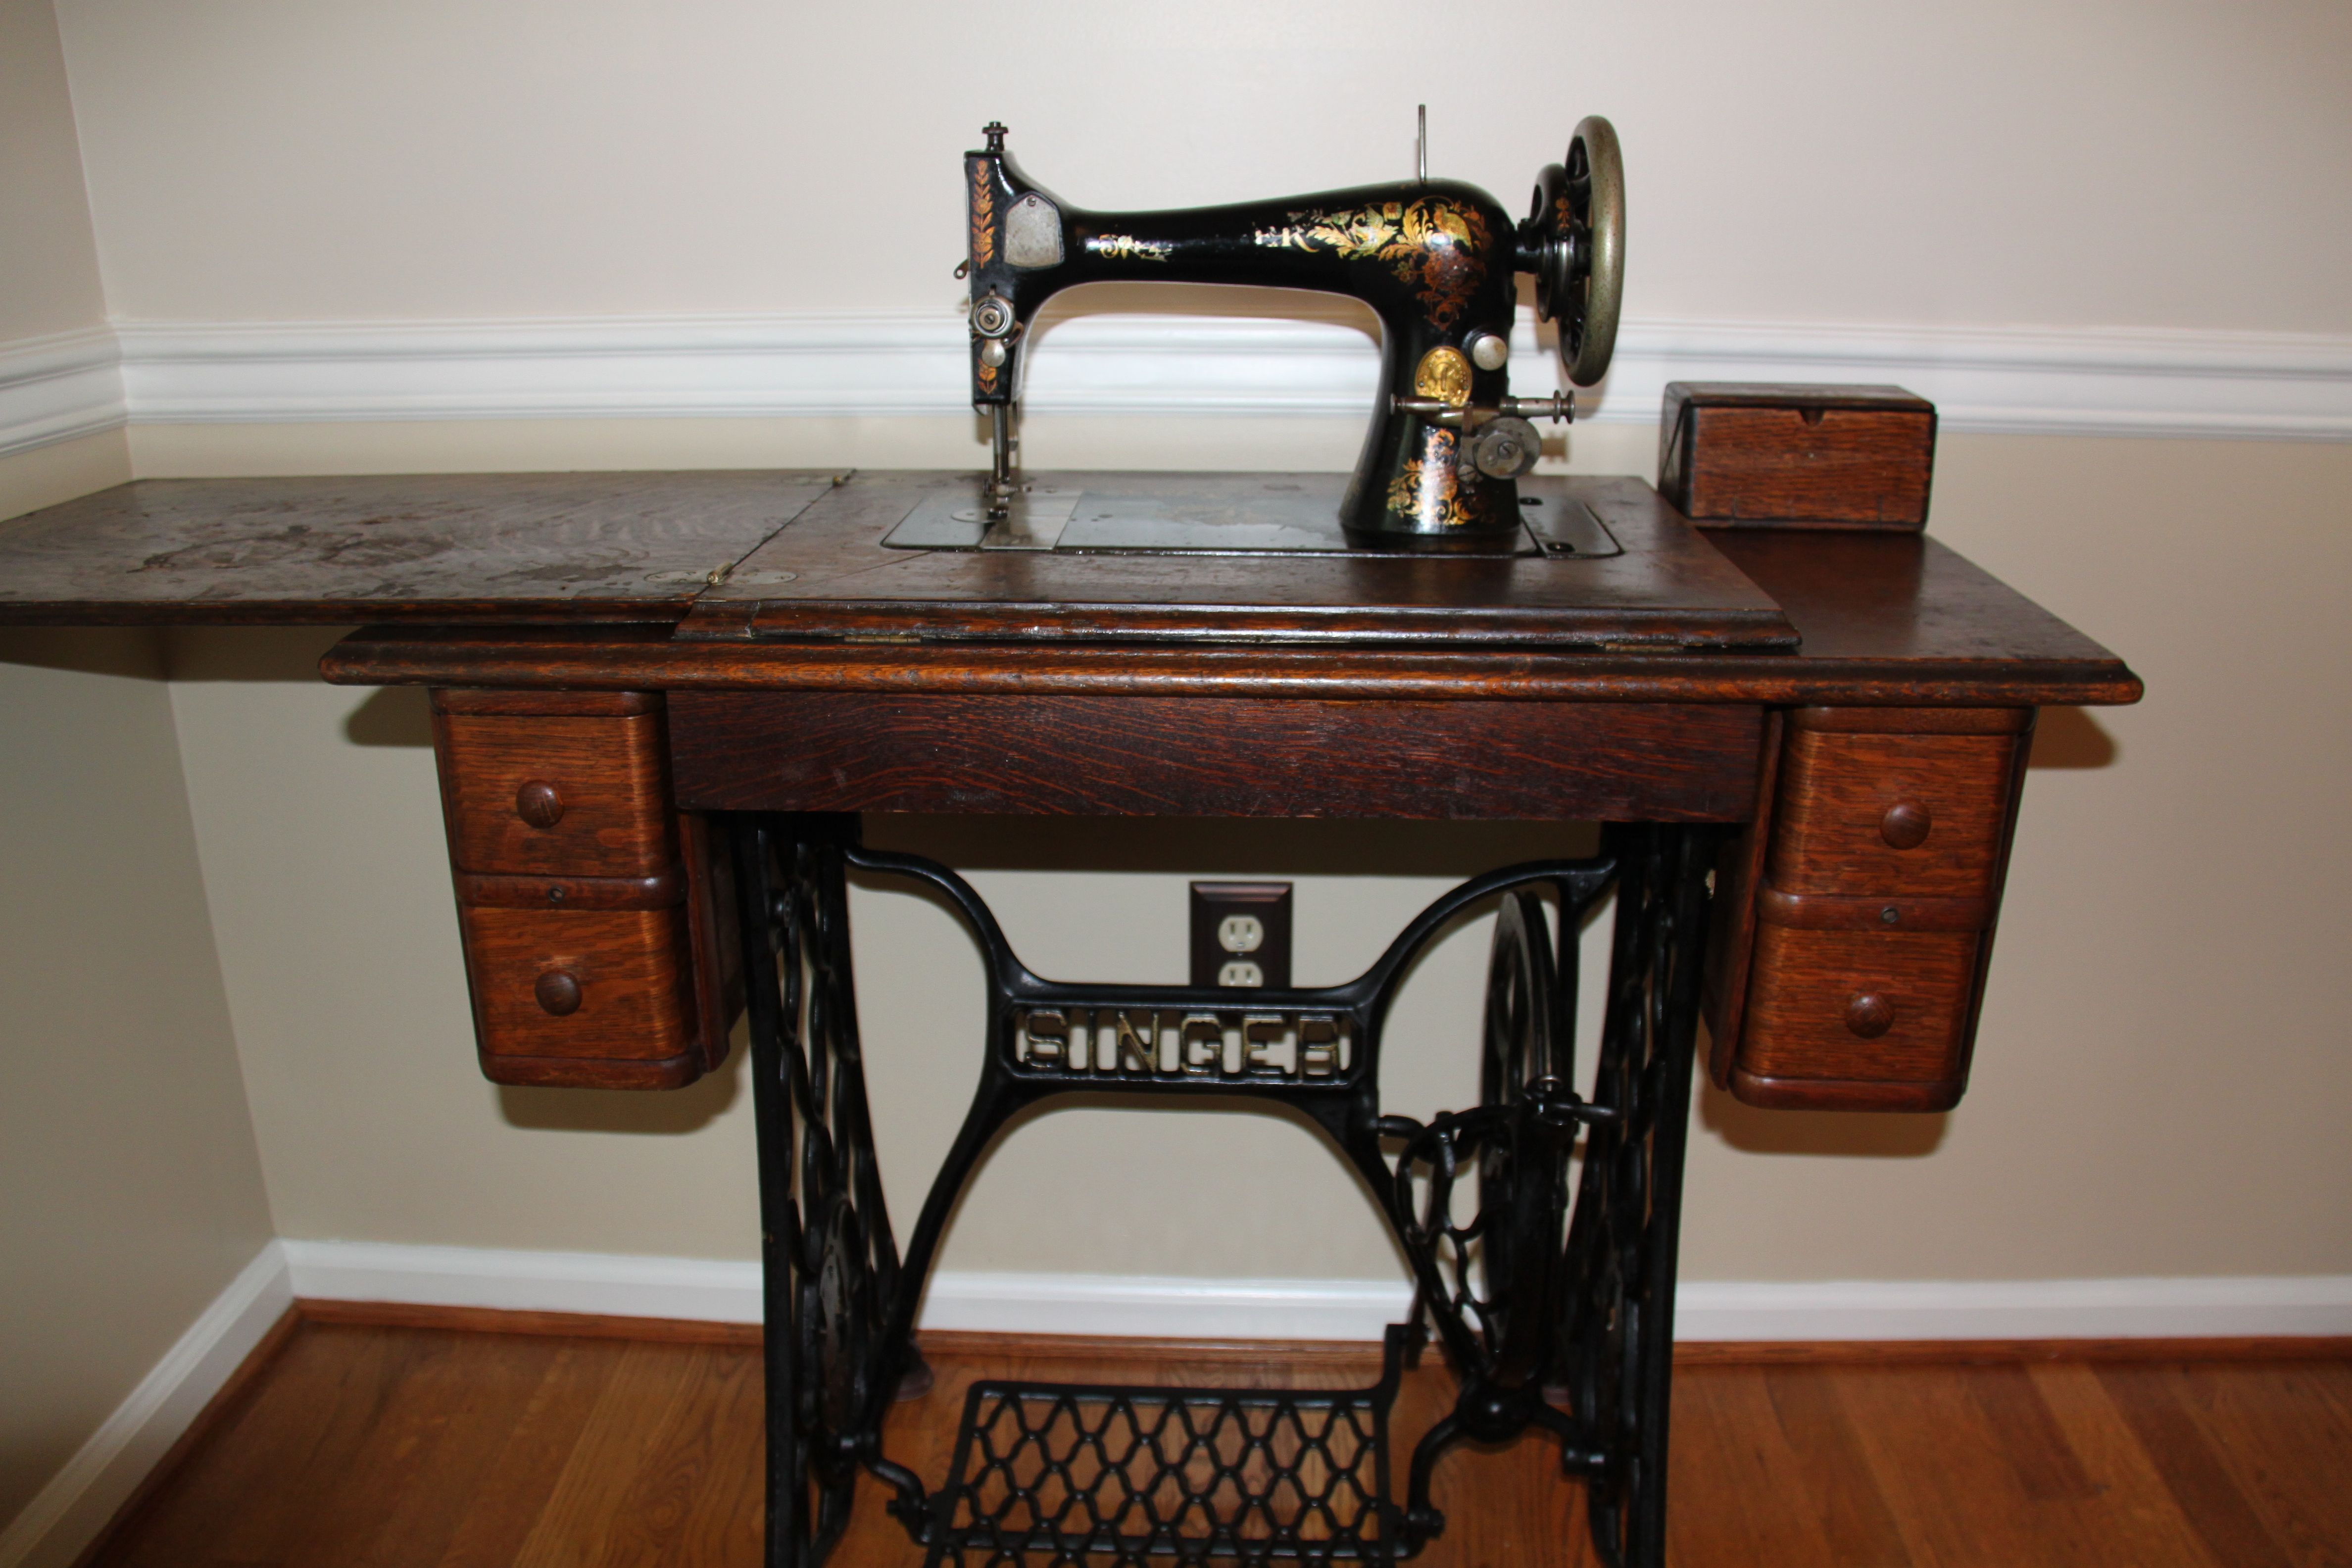 singer treadle 27 sewing machine manual